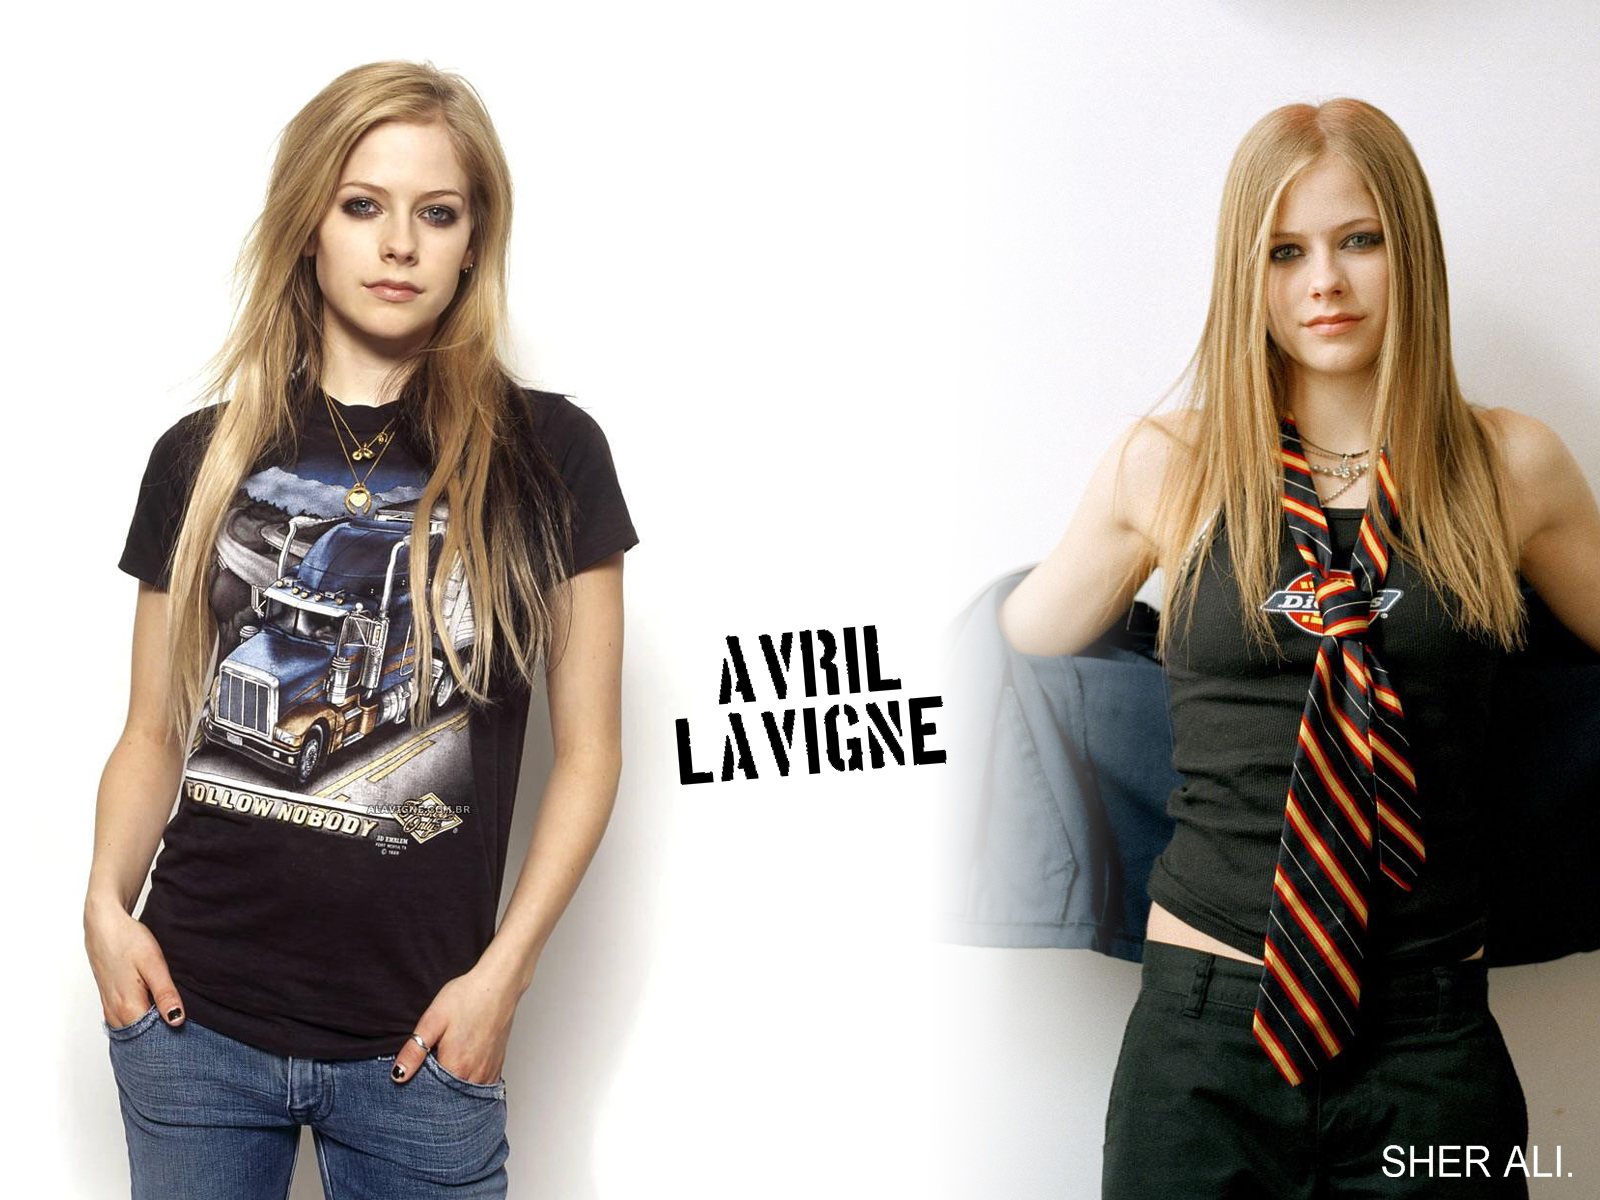 Avril Lavigne singing passionately on stage